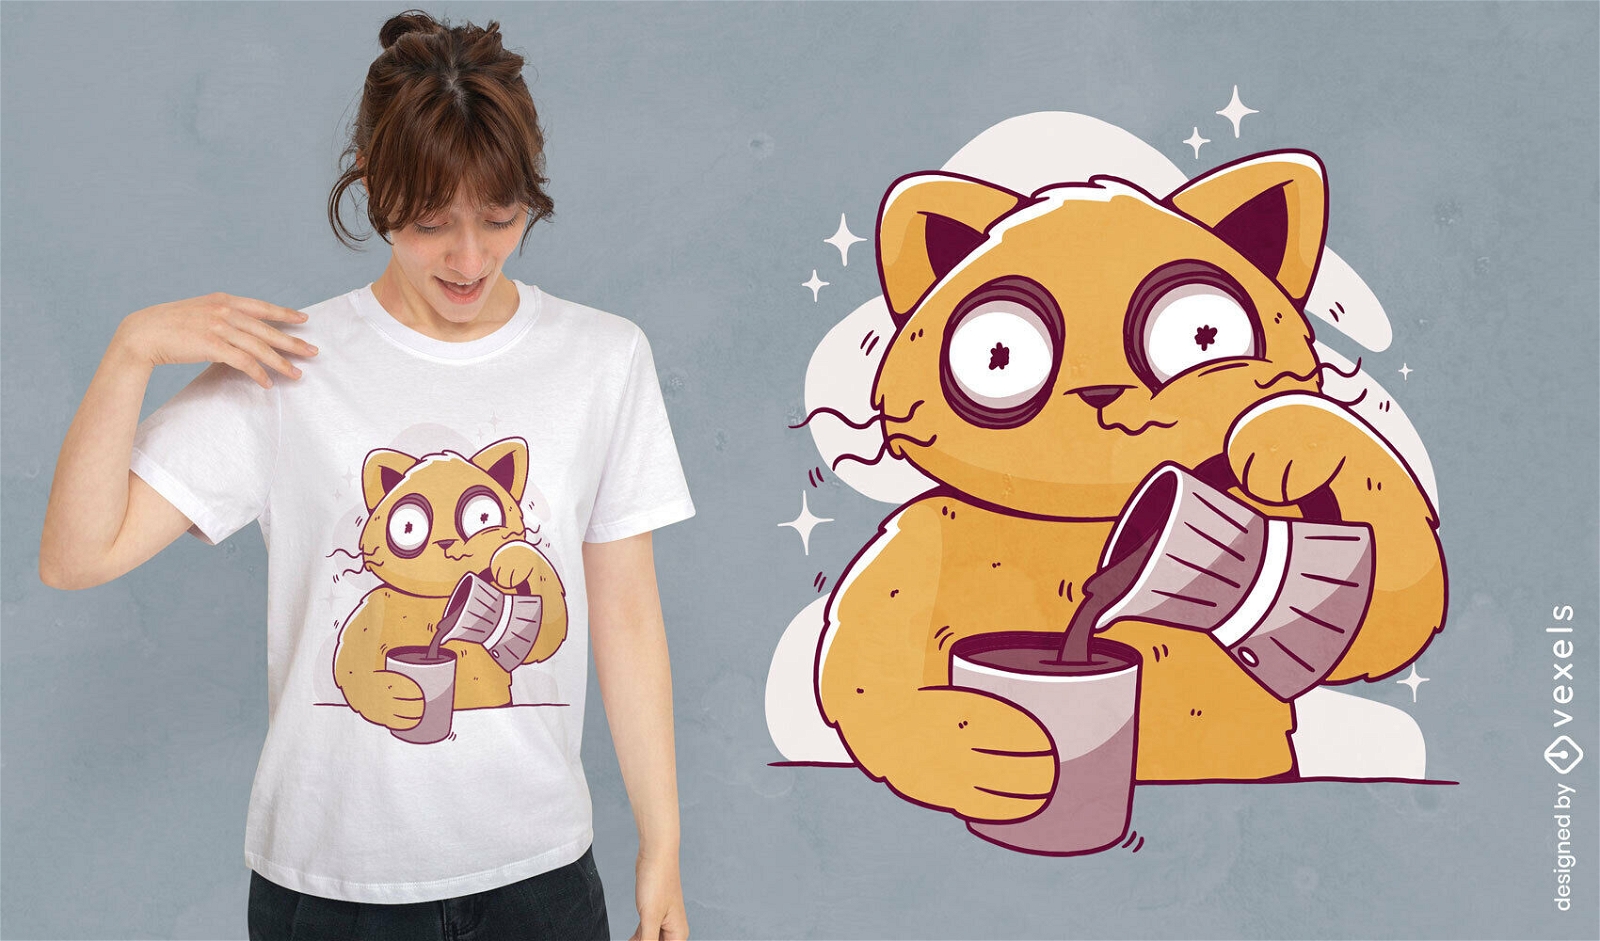 Insomnia cat drinking coffee t-shirt design